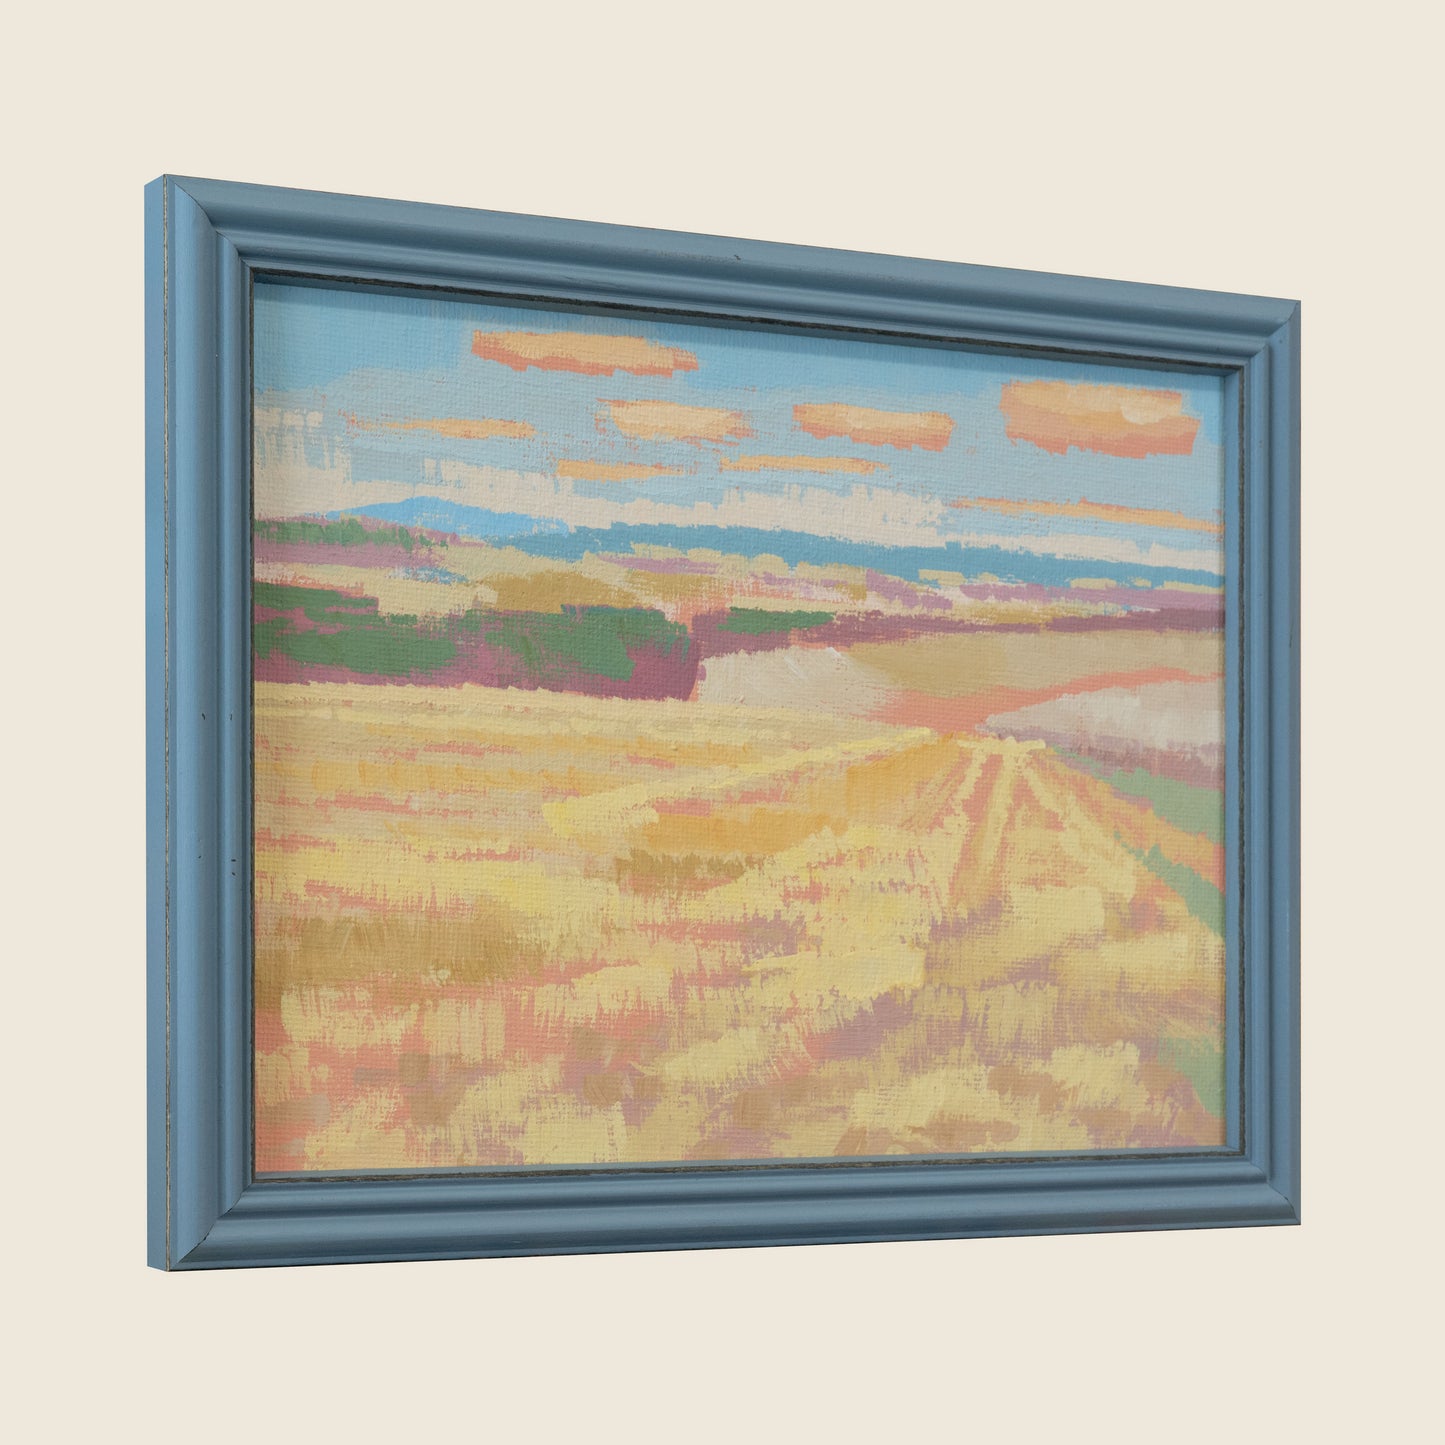 "Himmelblau", Unikat, Malerei, handgemaltes Einzelstück, 22,3 x 17,3 cm, mit Bilderrahmen